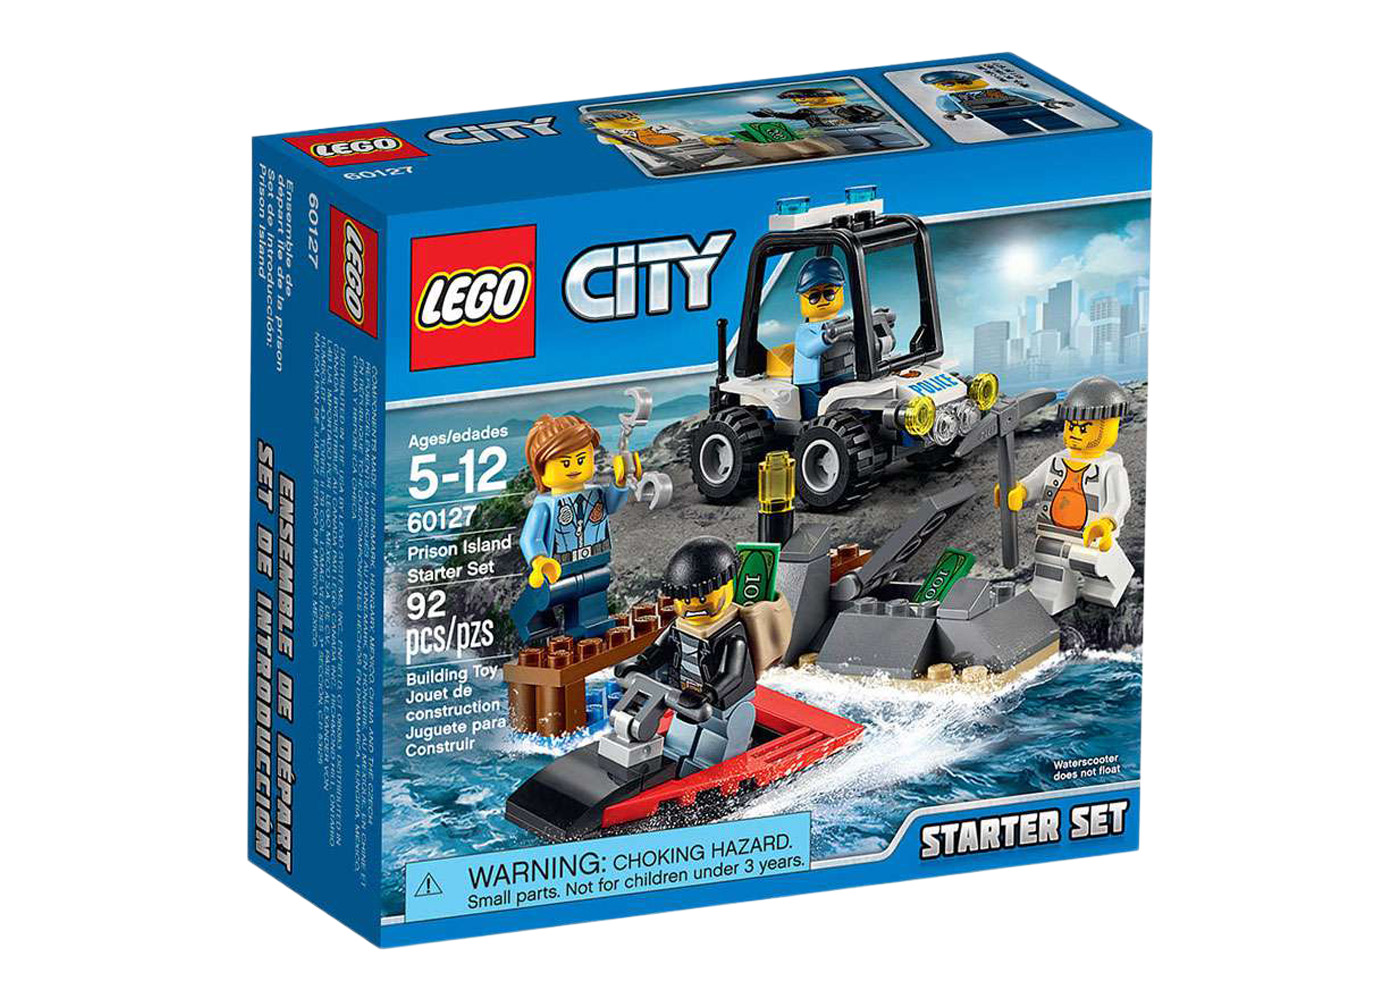 LEGO City Prison Island Set 60127